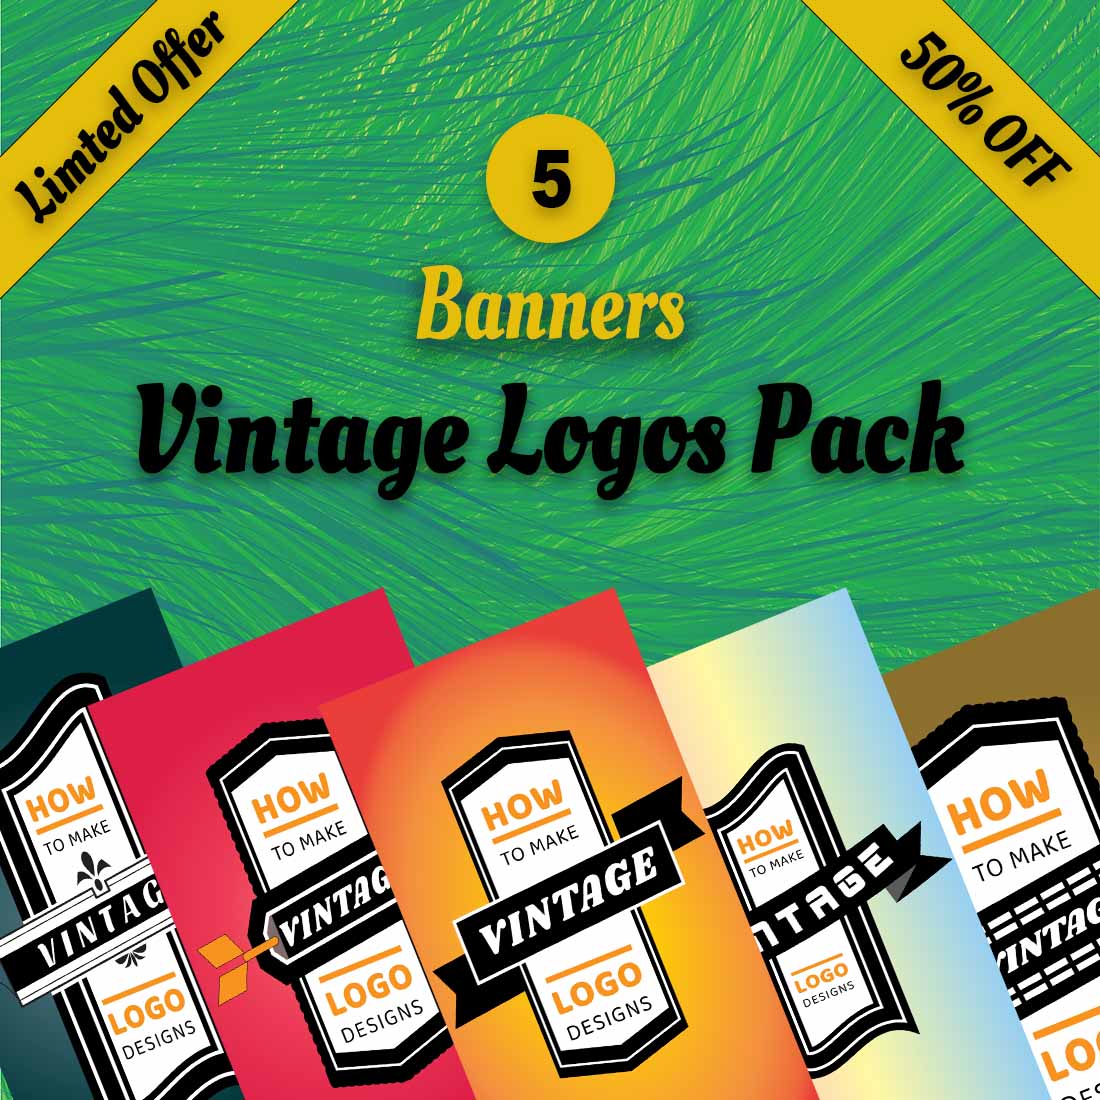 Vintage Banner Logos cover image.